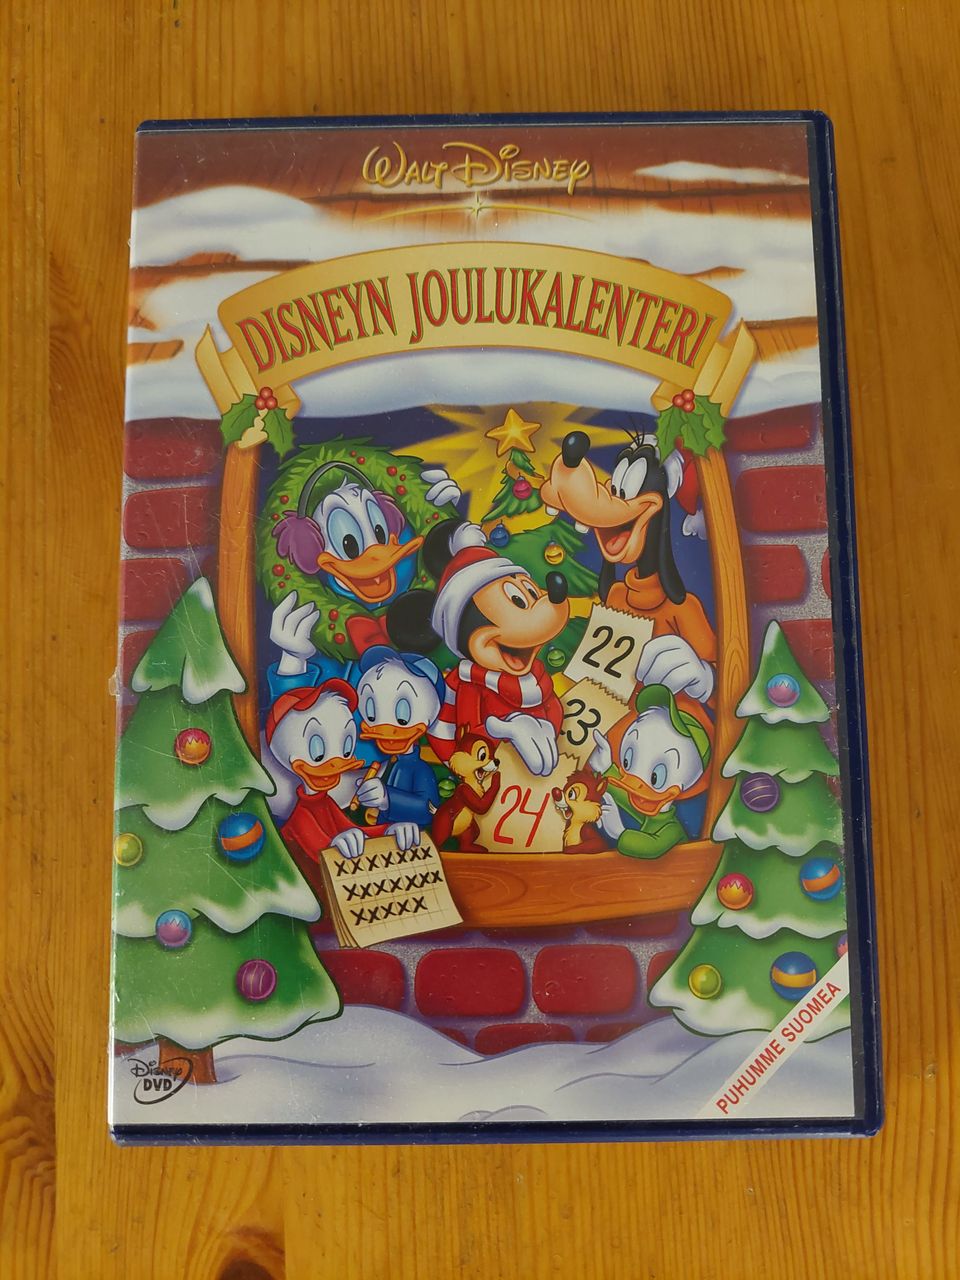 Disney joulukalenteri dvd